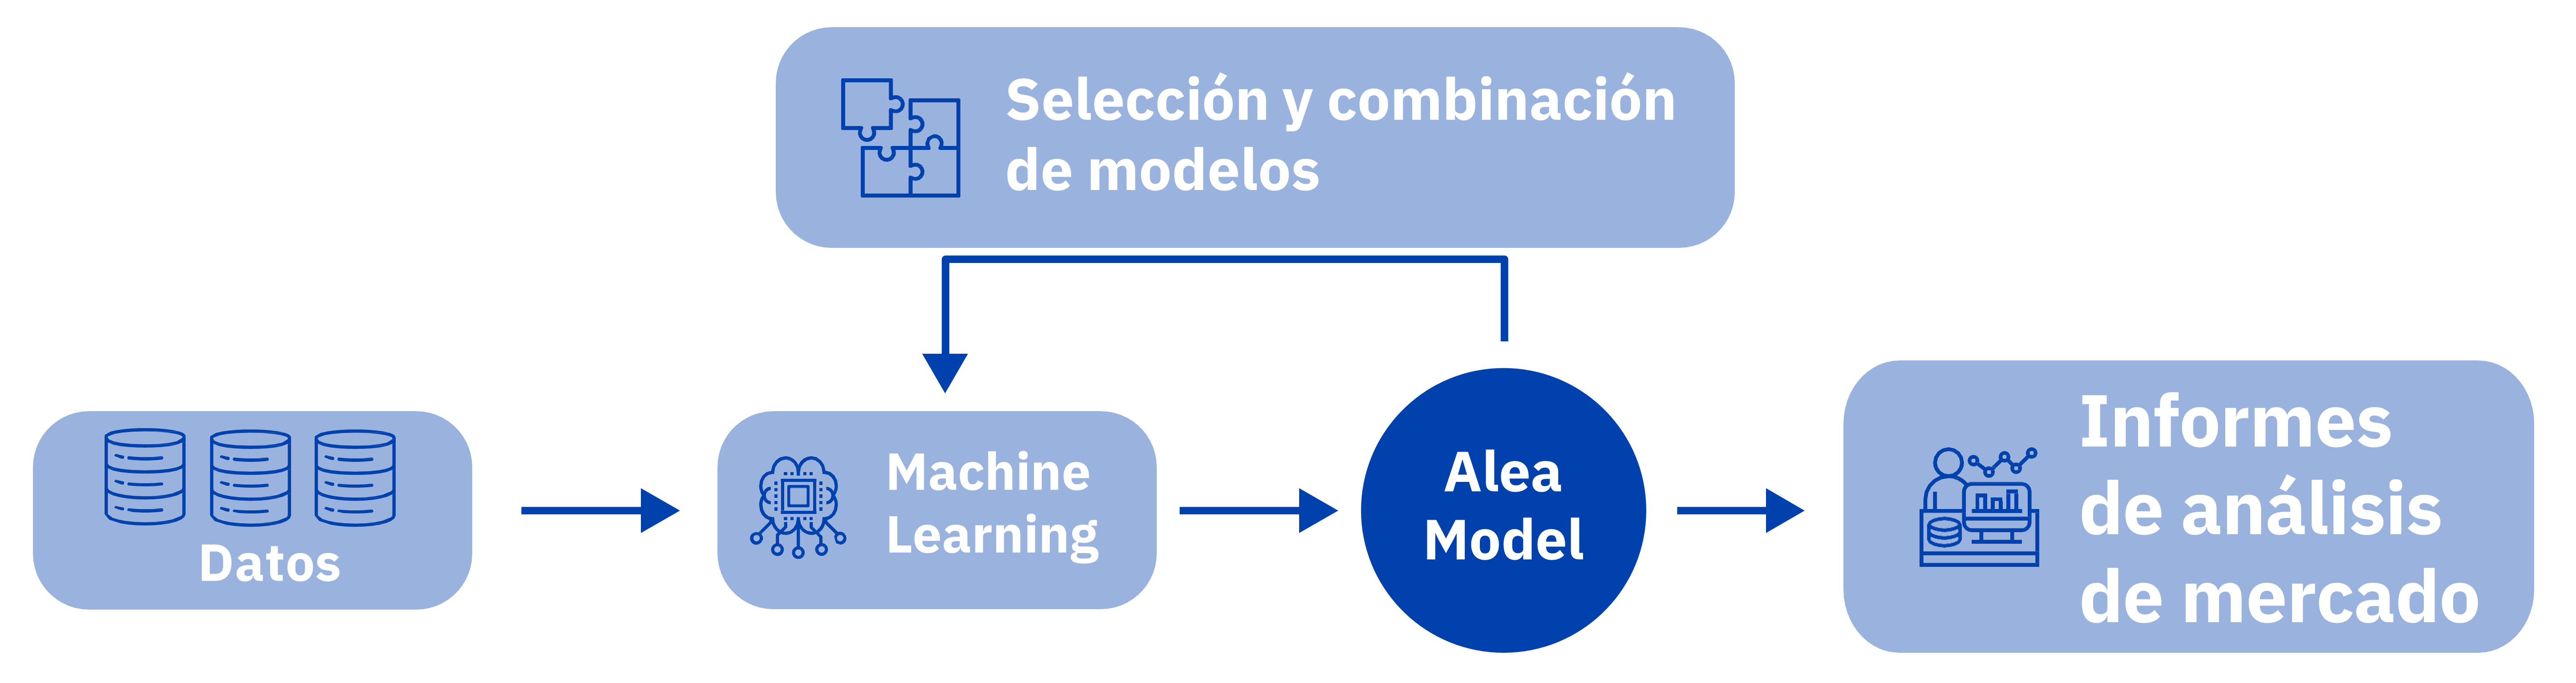 Fotografia Modelo Alea - Machine Learning